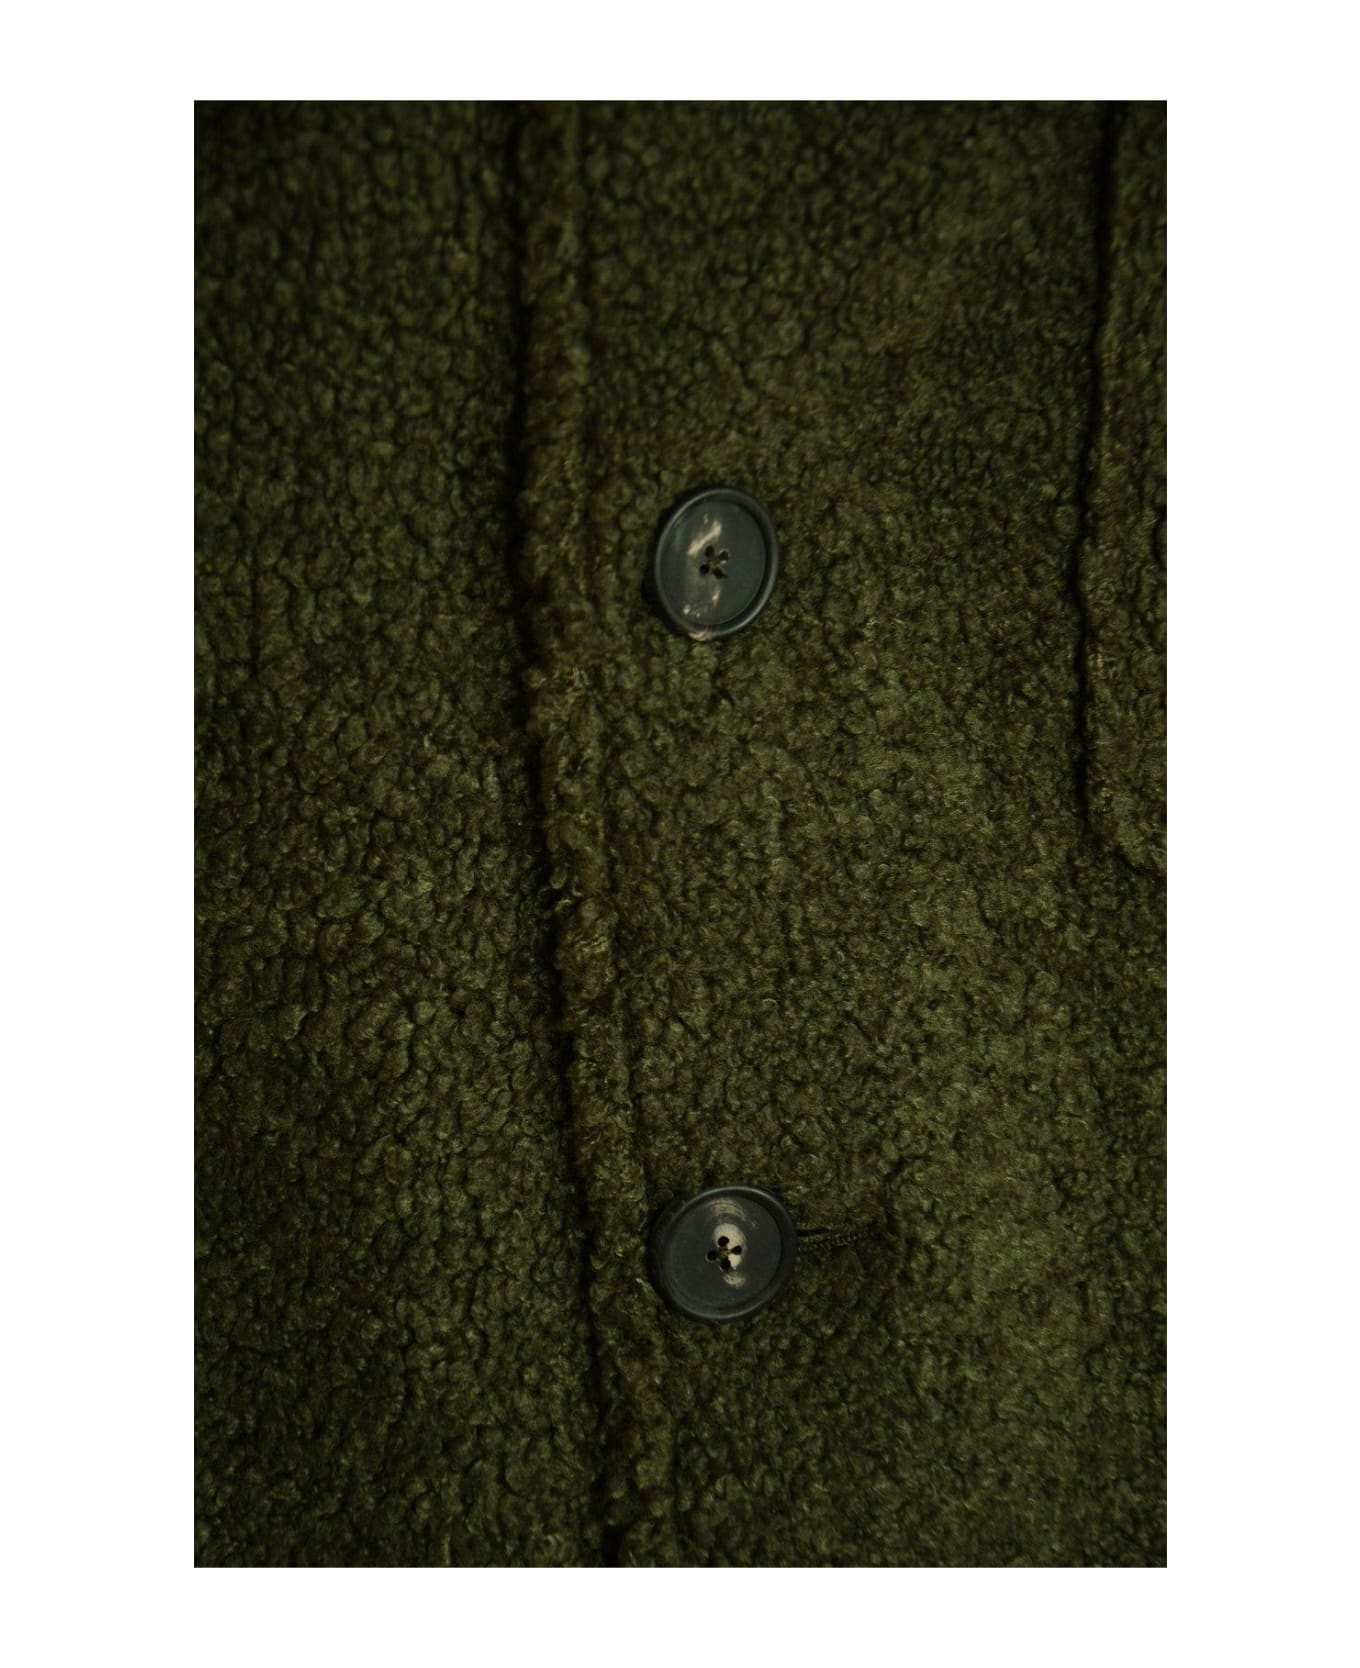 Tagliatore Spread-collared Buttoned Shirt Jacket